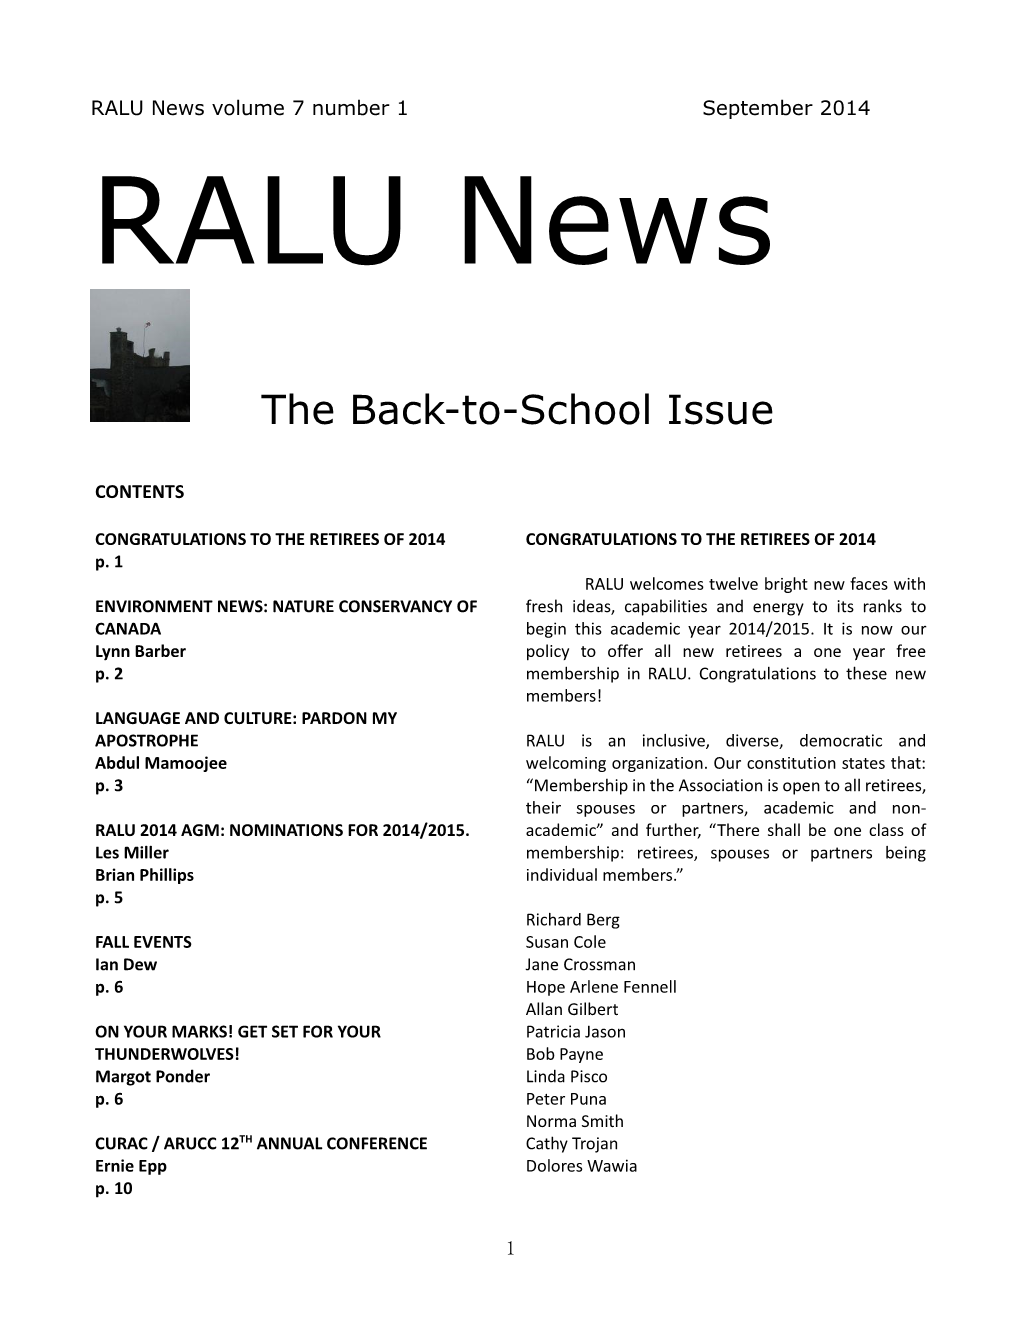 RALU News Volume 7 Number 1 September 2014